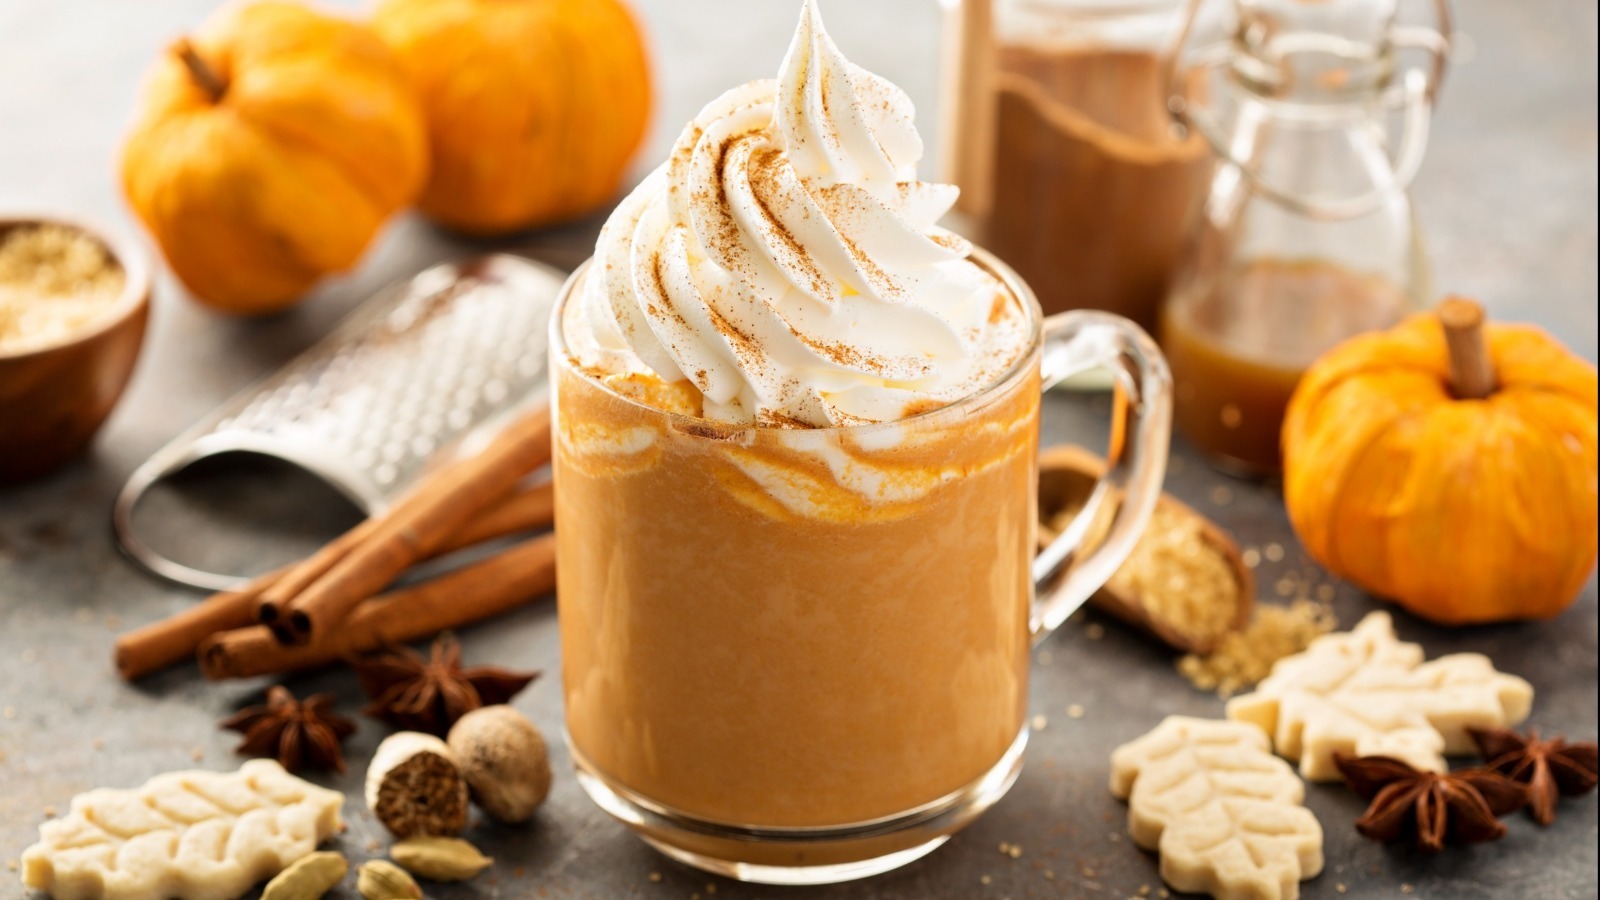 Why is Pumpkin Spice Latte so popular?